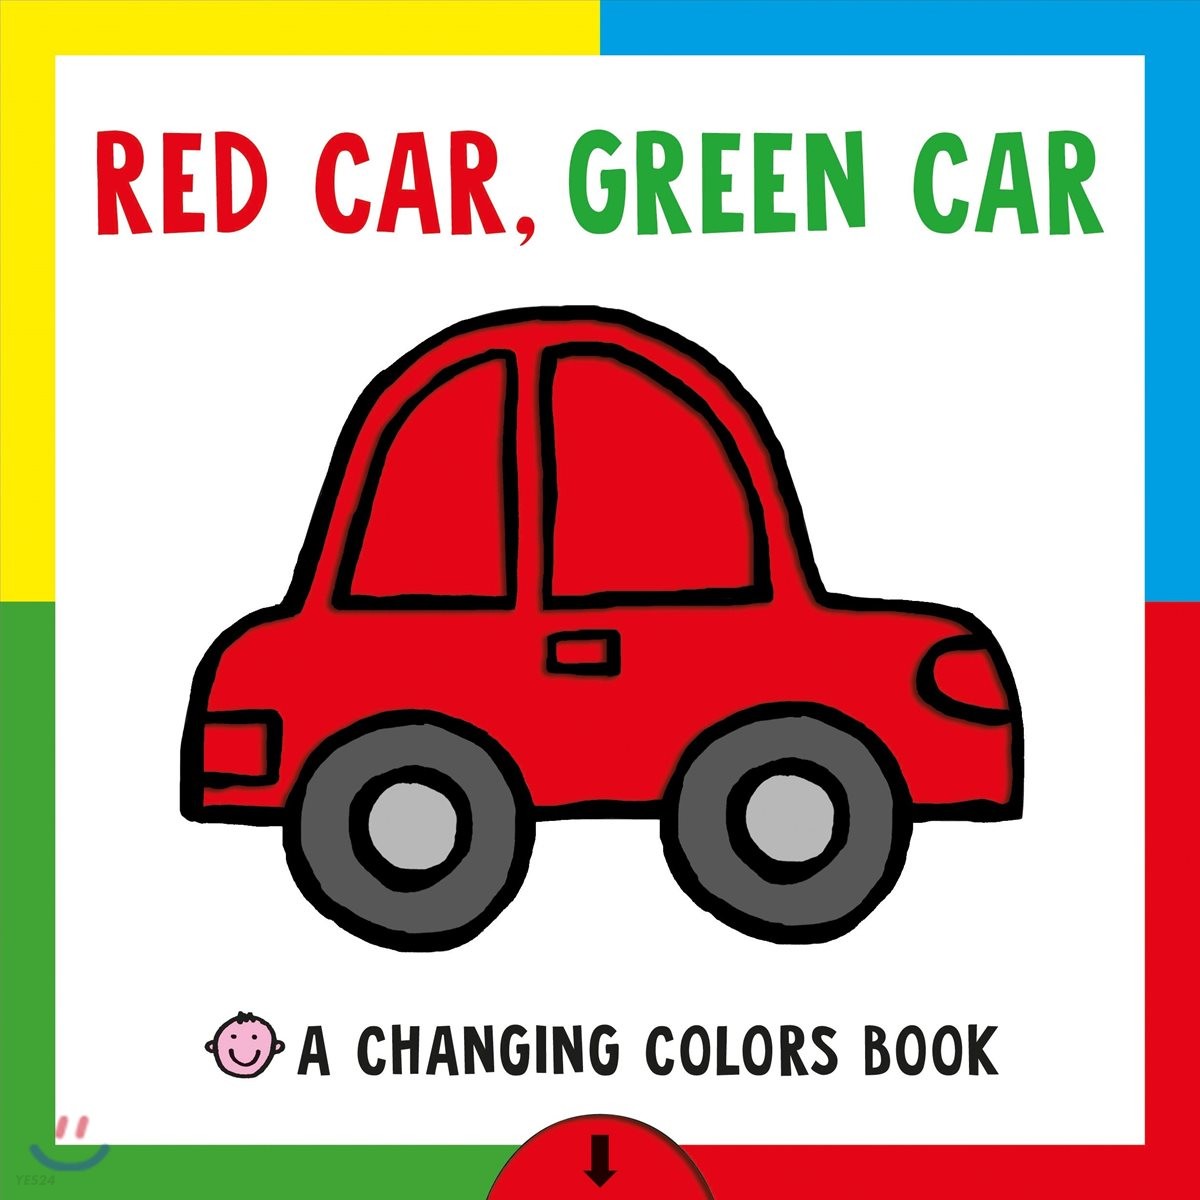 Red car green car